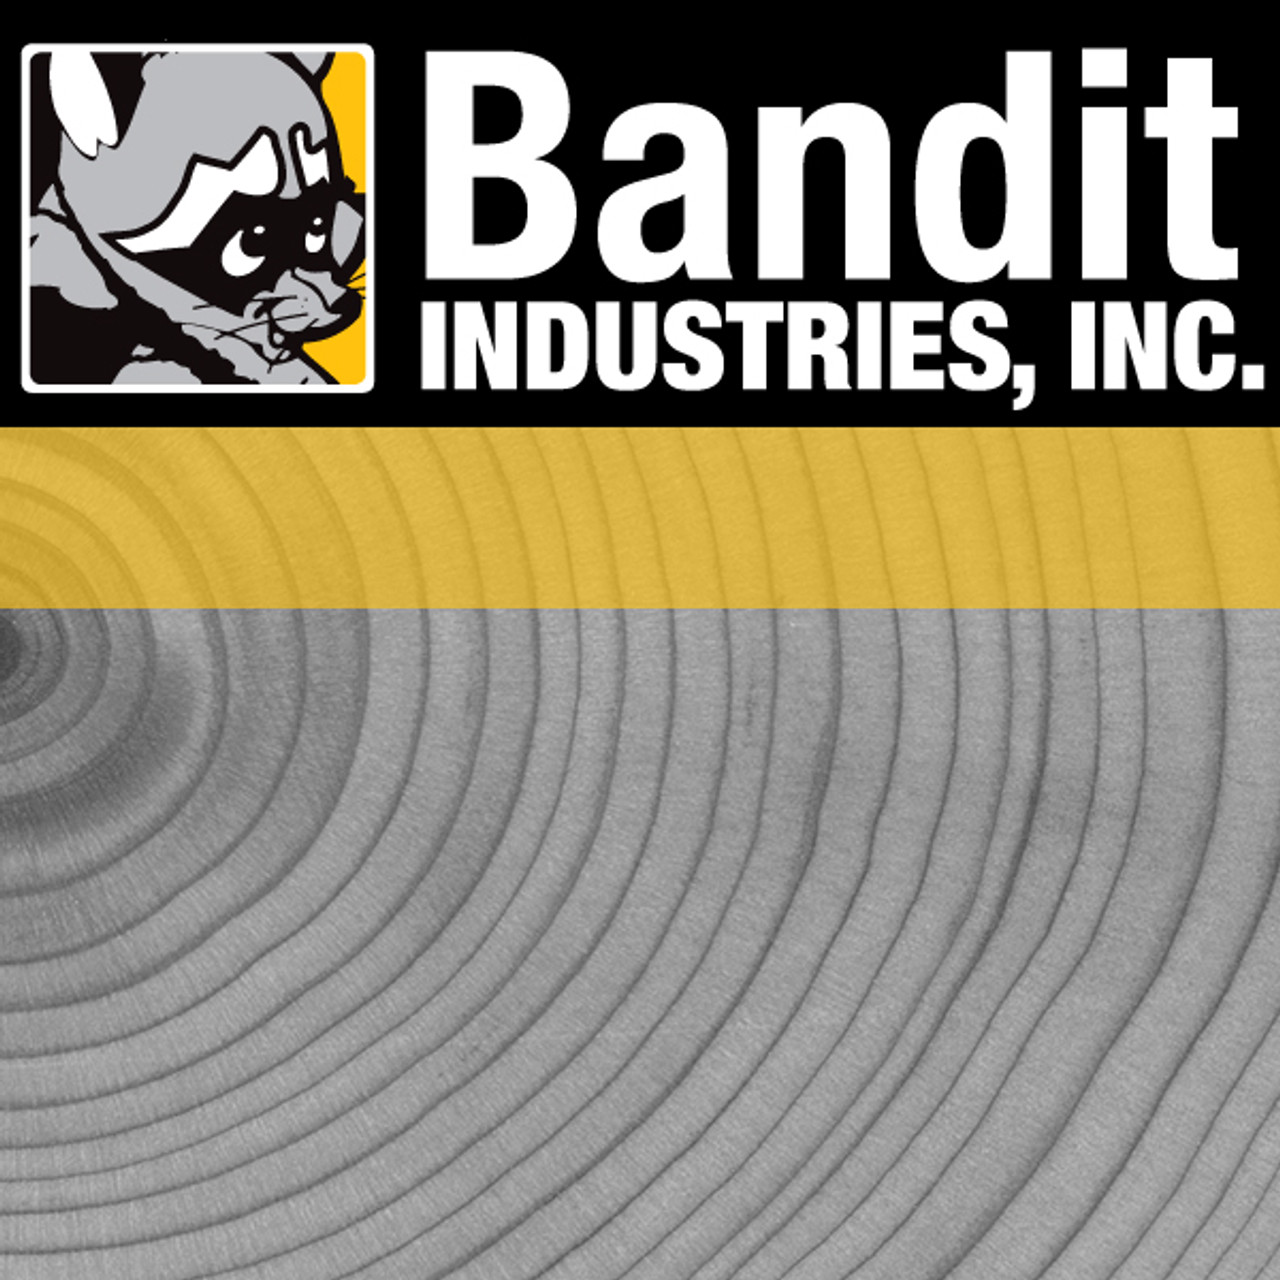 904-0001-02: BANDIT JD 4045 FRONT WRAP 35"" #SD2029